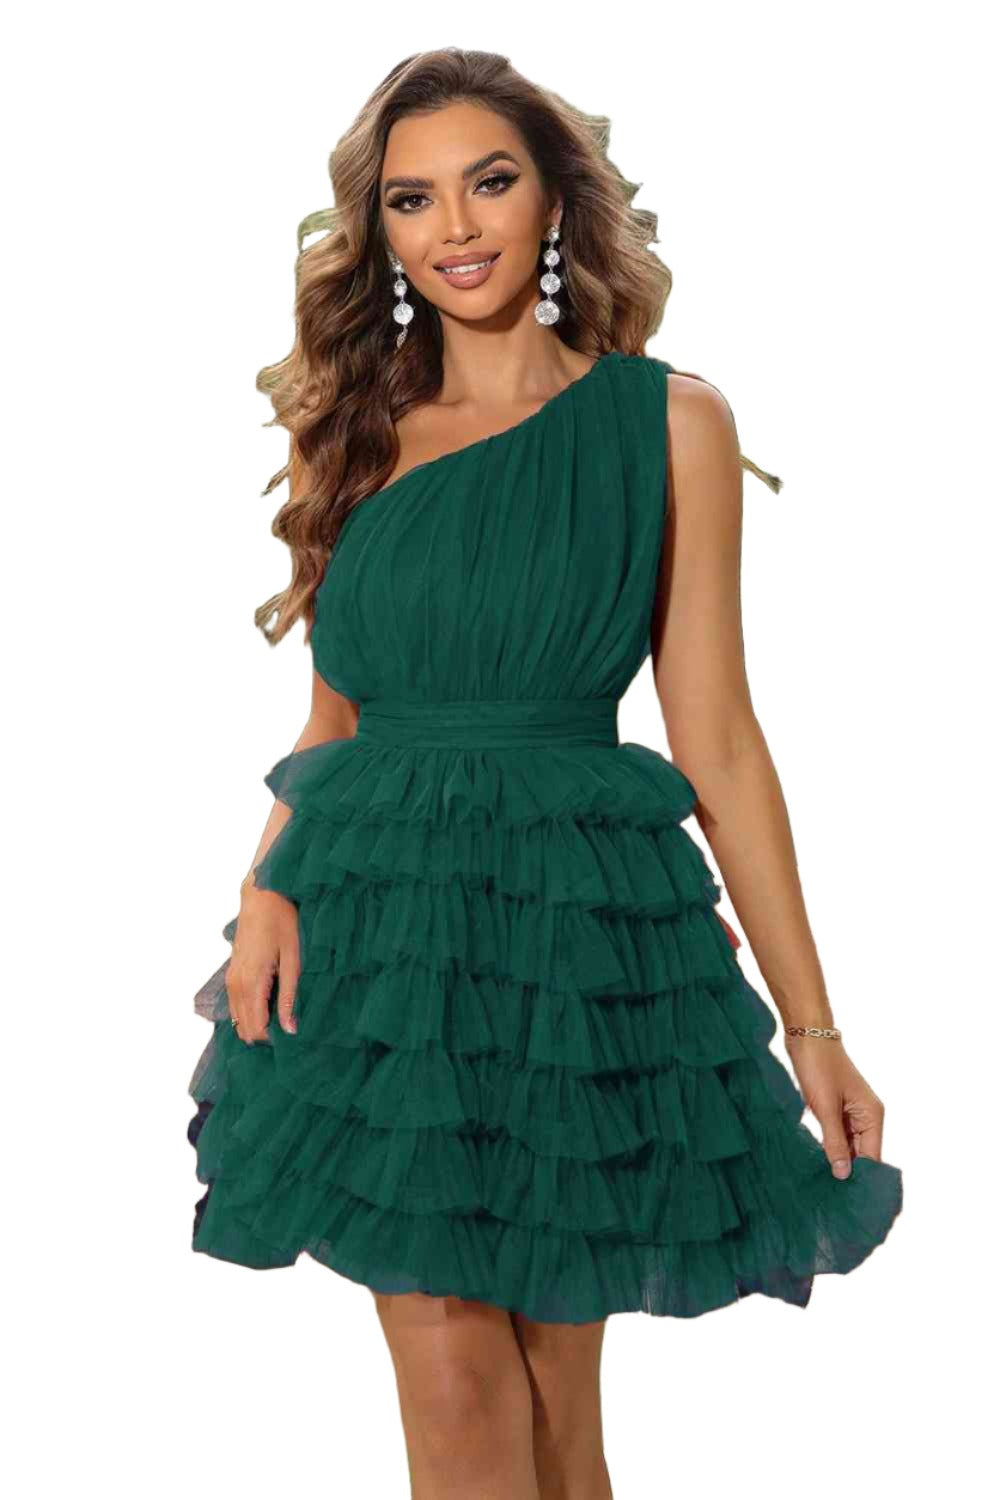 Samantha Stylish One-Shoulder Mesh Overlay Dress with Chic Ruffle Trim